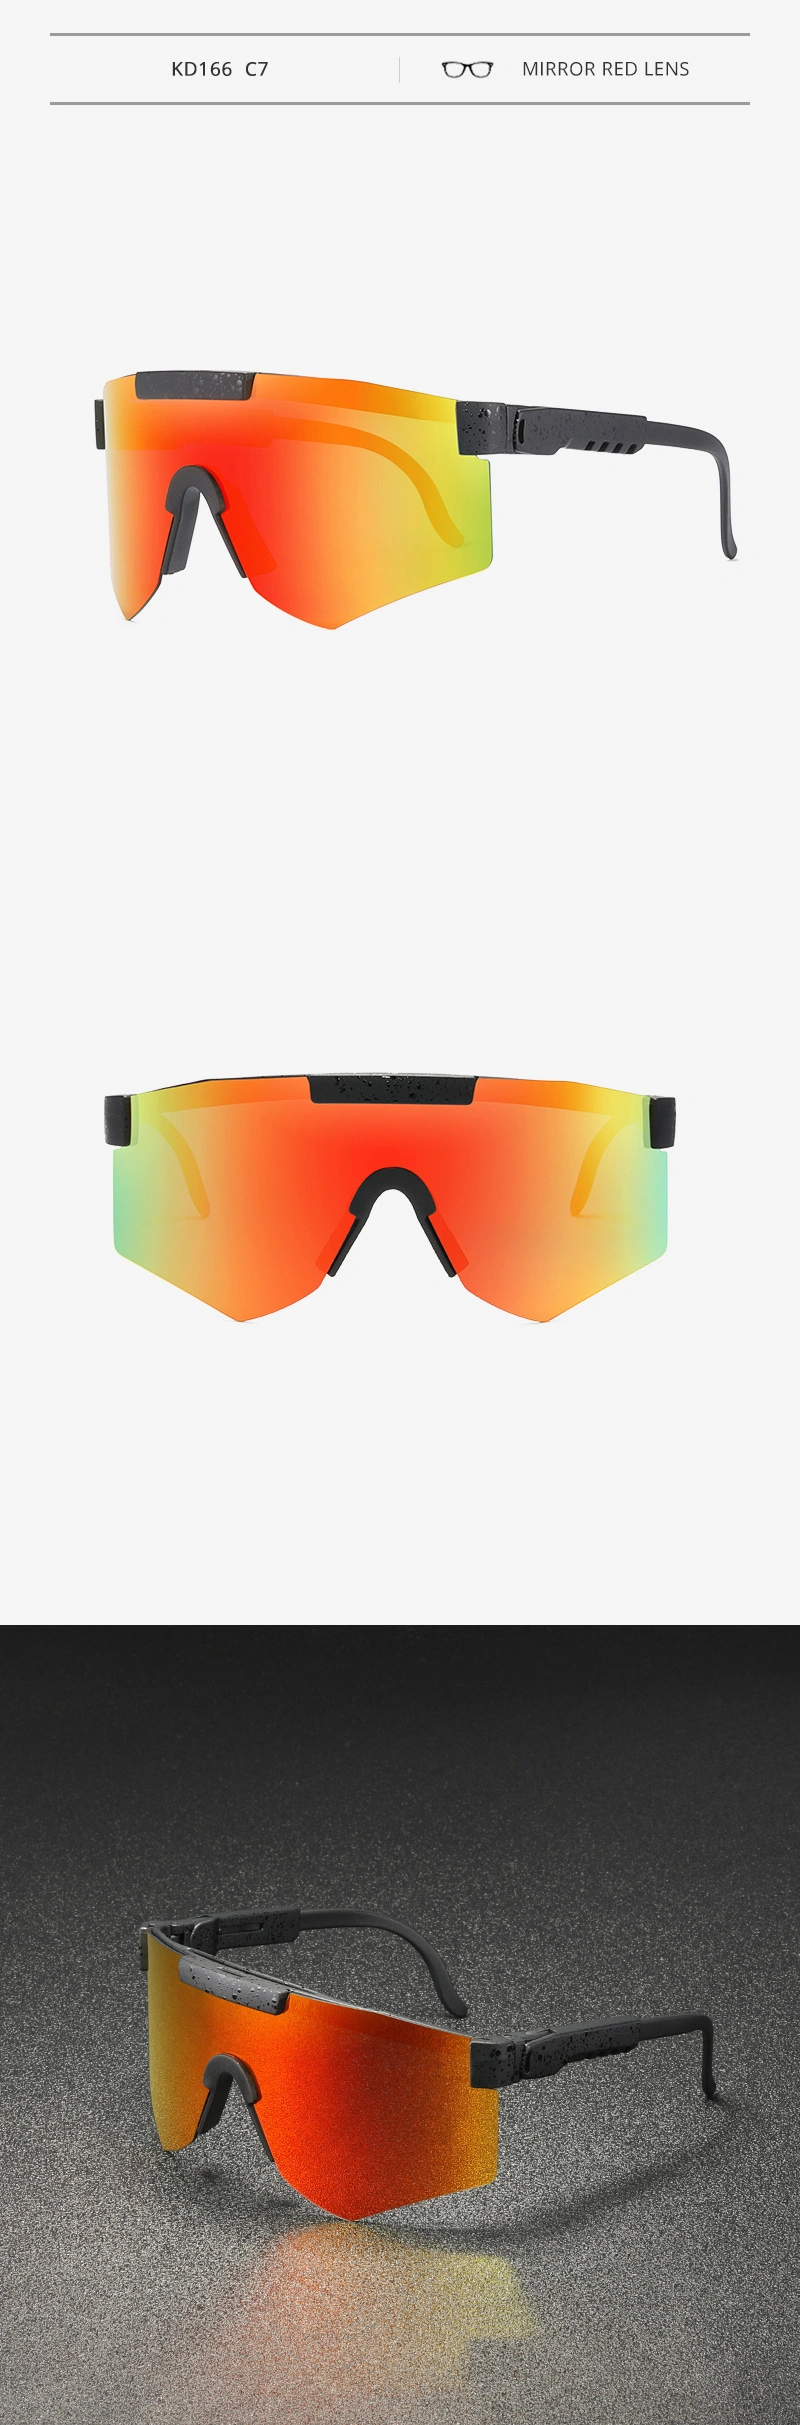 Sunglasses Sport Cycling Best Quality Oversize Polarized Sunglasses